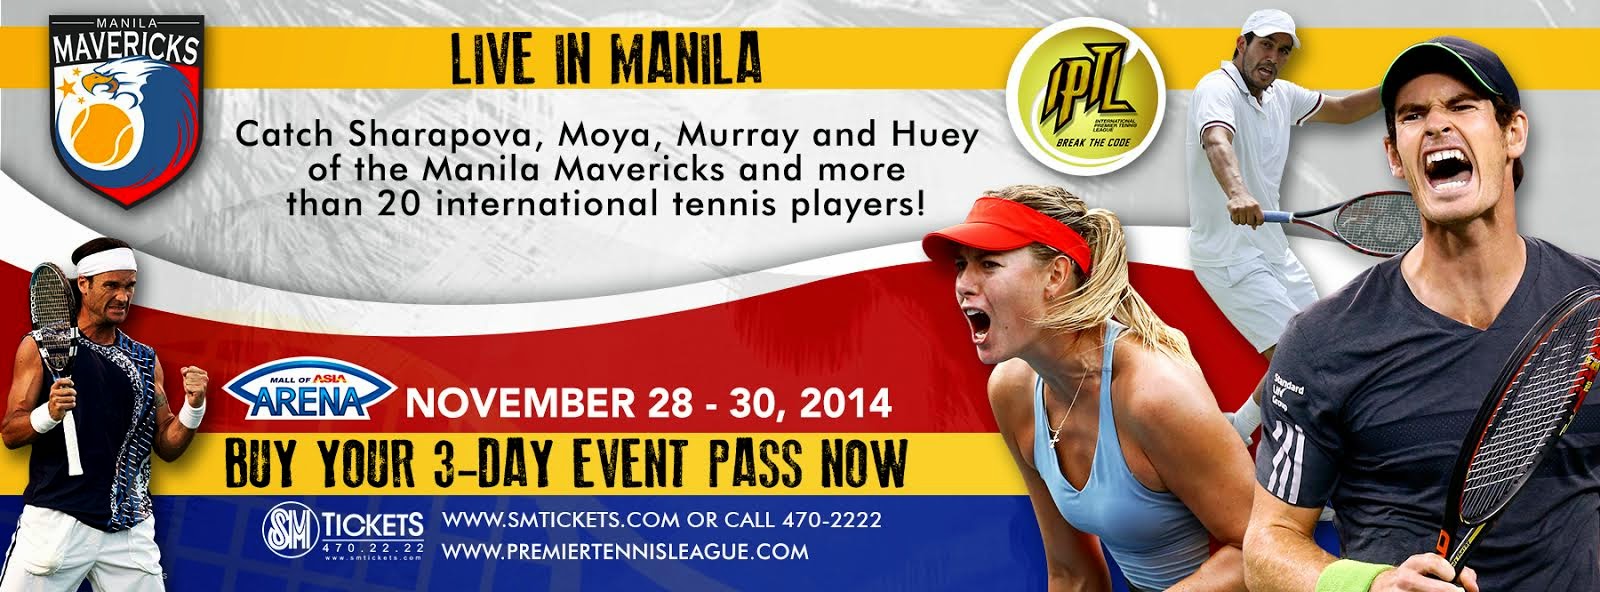  Sharapova, Williams, Murray Playing in Manila for the International Premier Tennis League